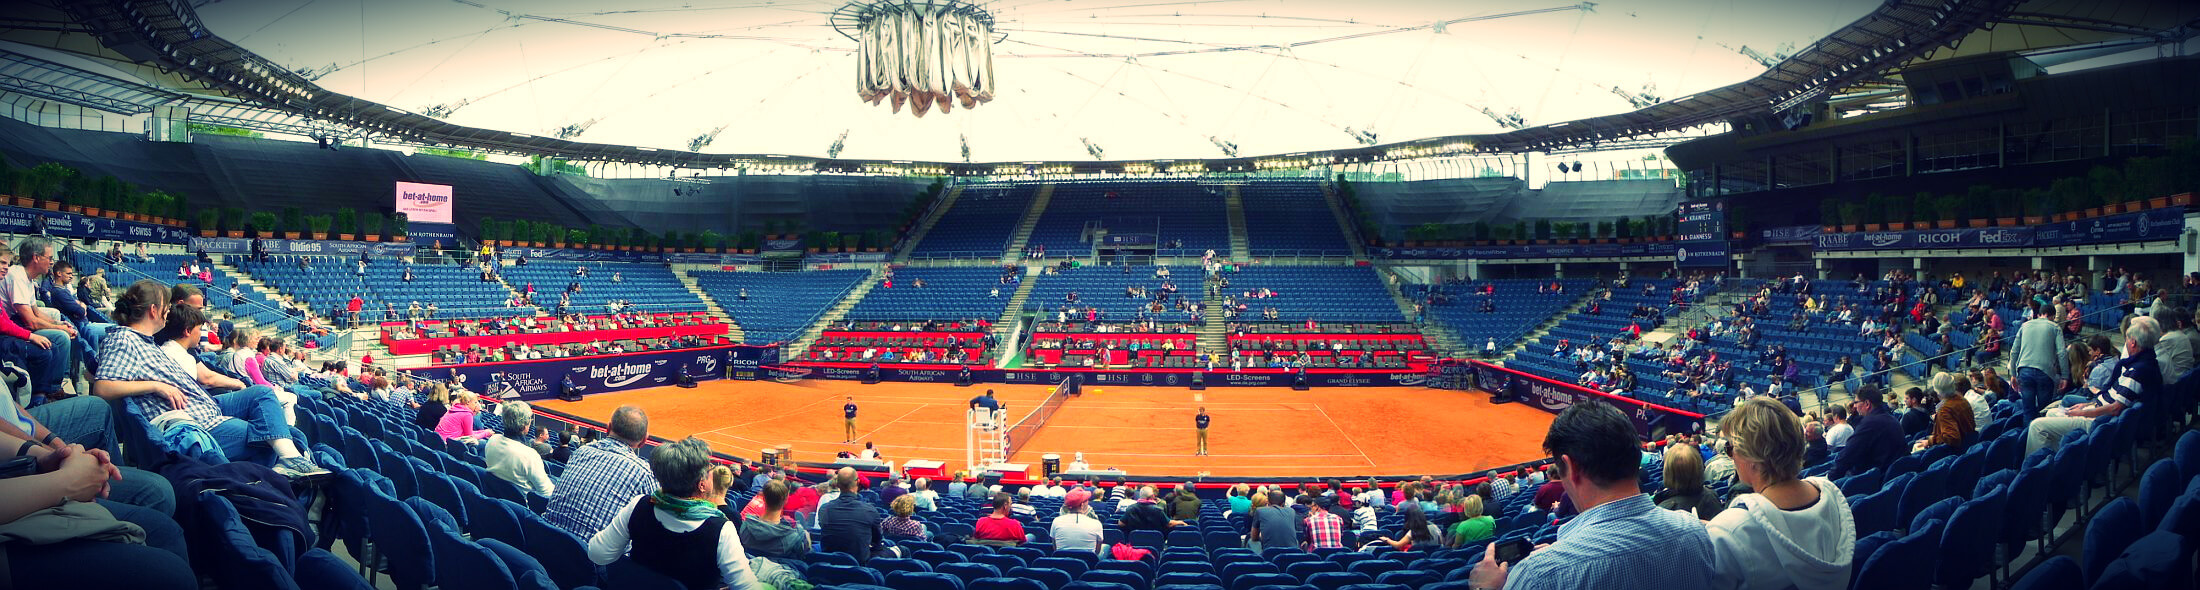 Tennis German Open 2012, Hamburg Rotherbaum